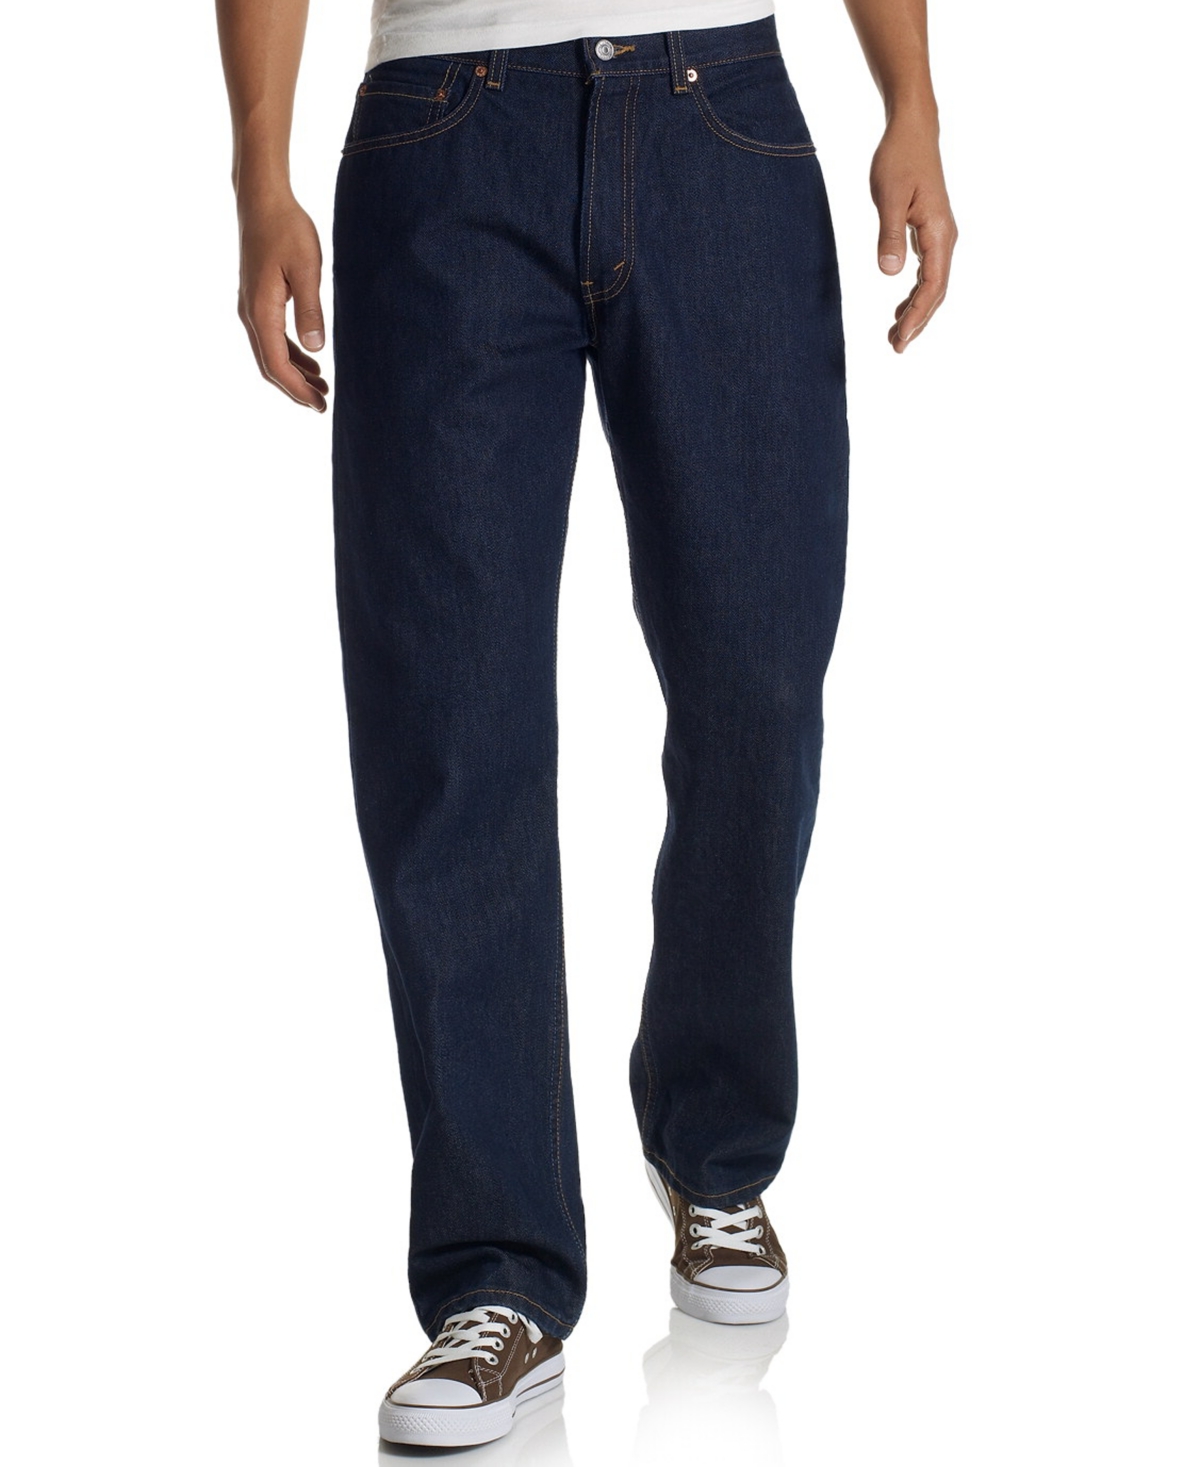 Levi's Men's 505 Regular Straight Fit Non-Stretch Jeans